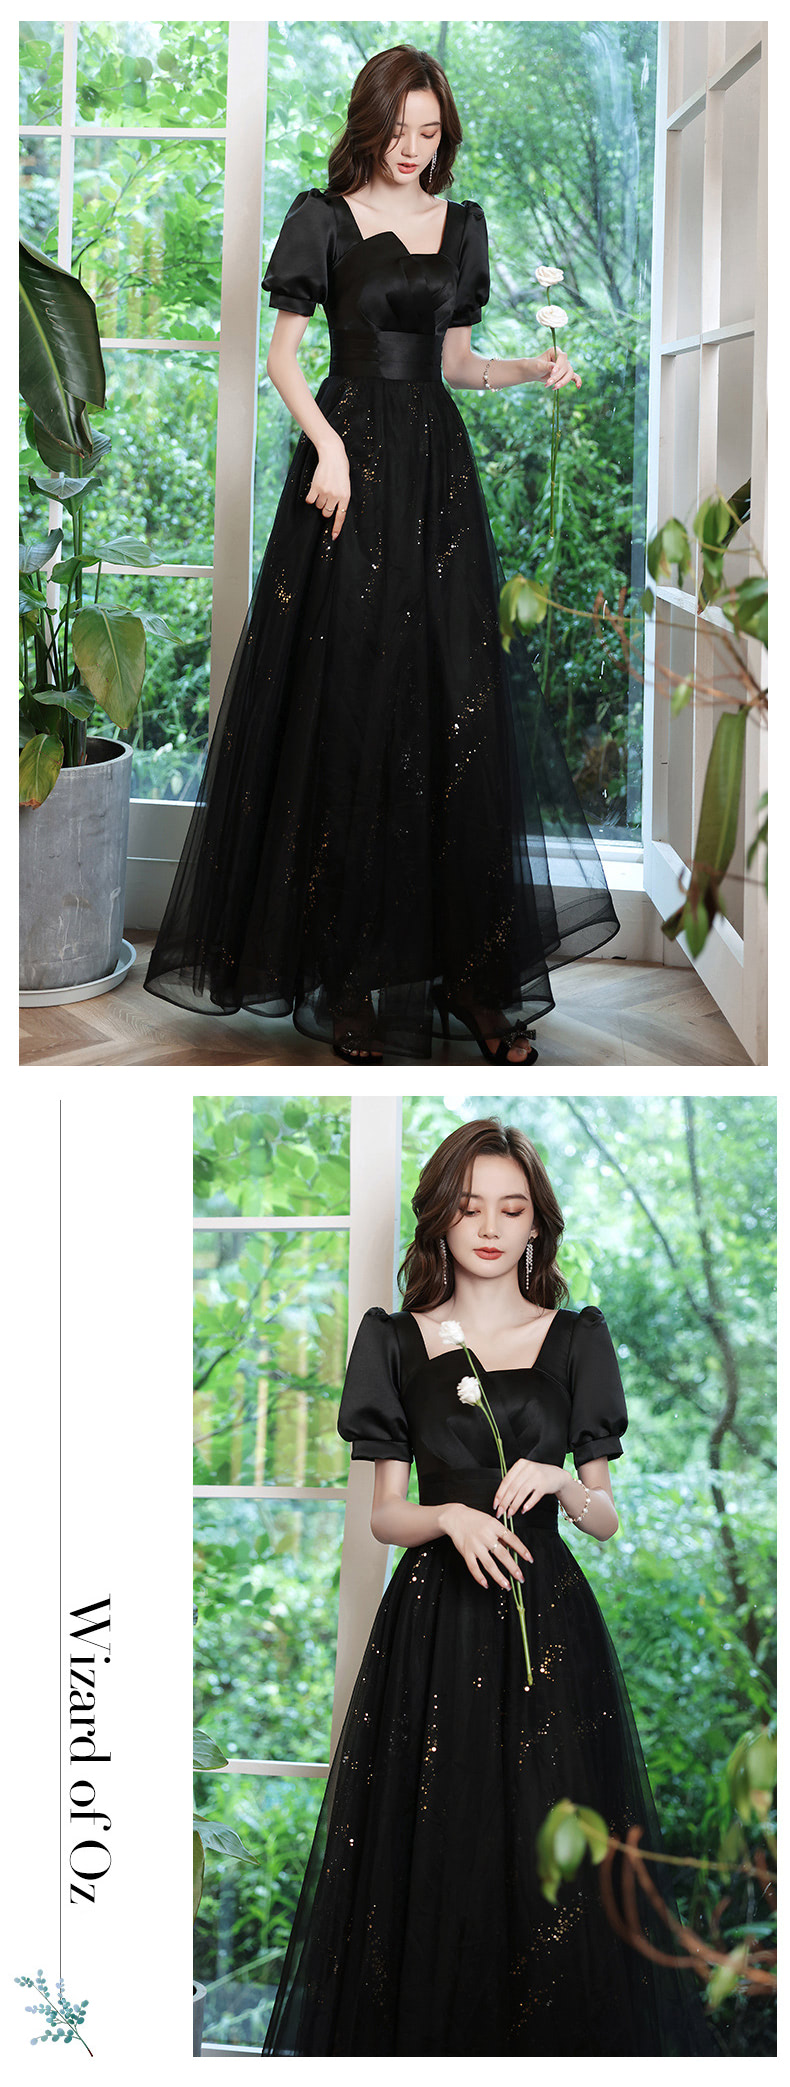 Black-Short-Sleeve-Maxi-Evening-Dress-Party-Formal-Gown12.jpg